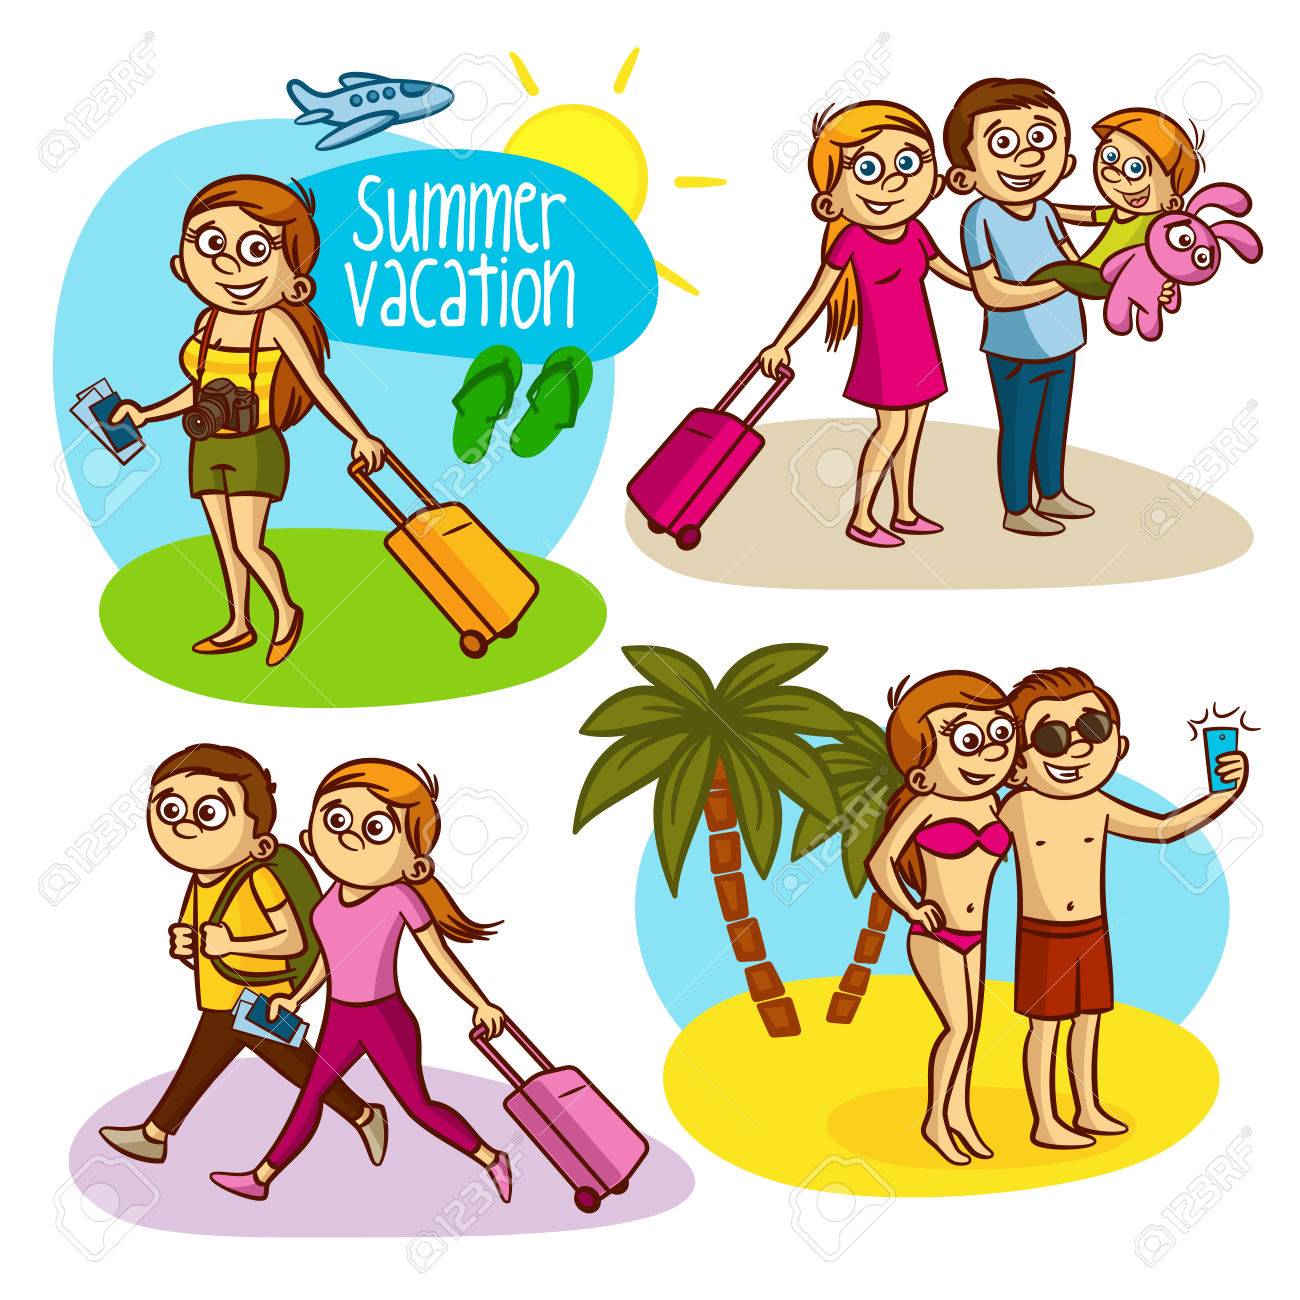 Summer vacation travel family